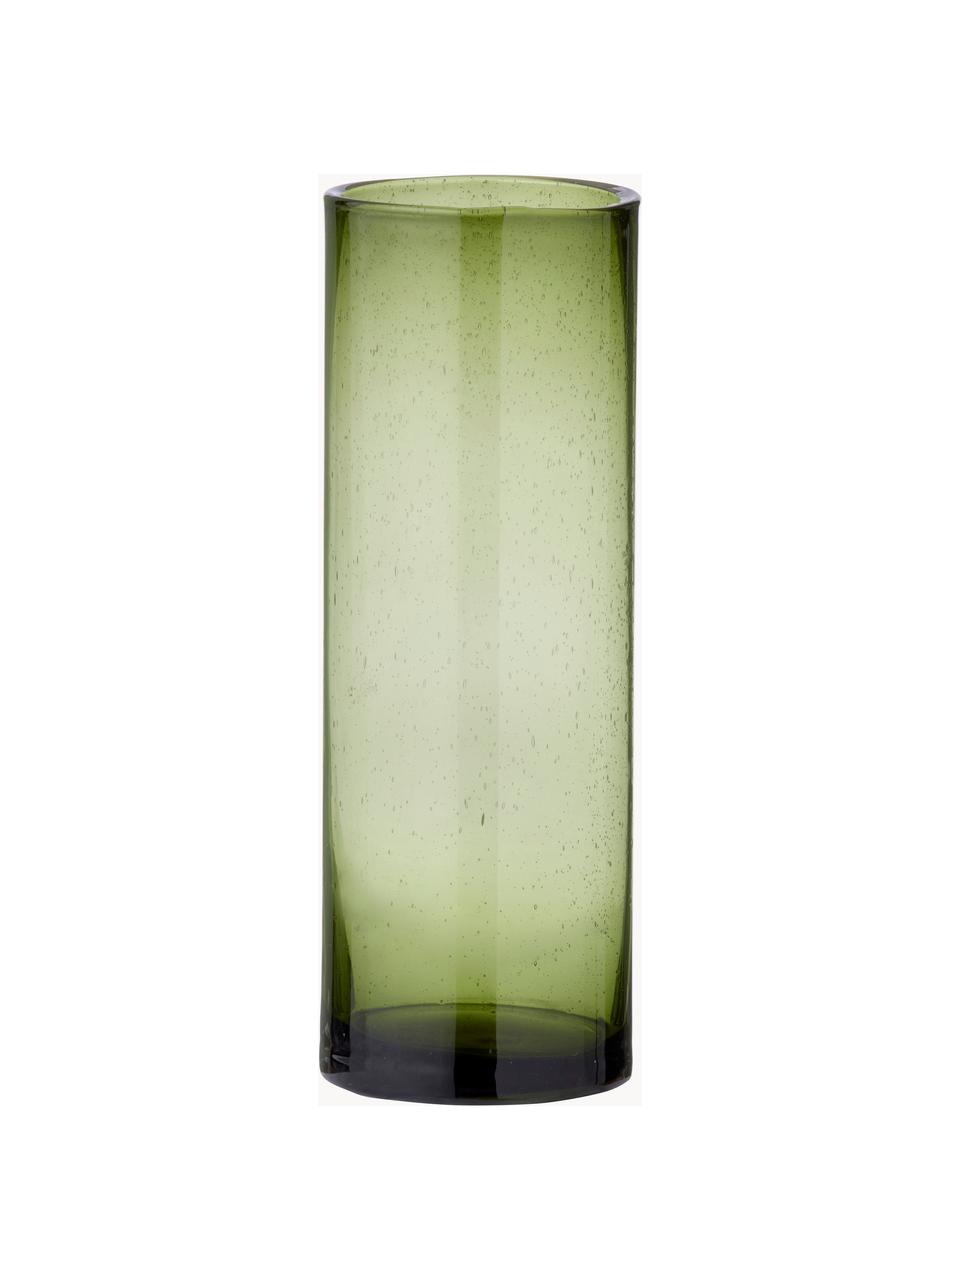 Vaso in vetro Salon alt. 31 cm, Vetro, Tonalità verdi, semi trasparente, Ø 11 x Alt. 31 cm